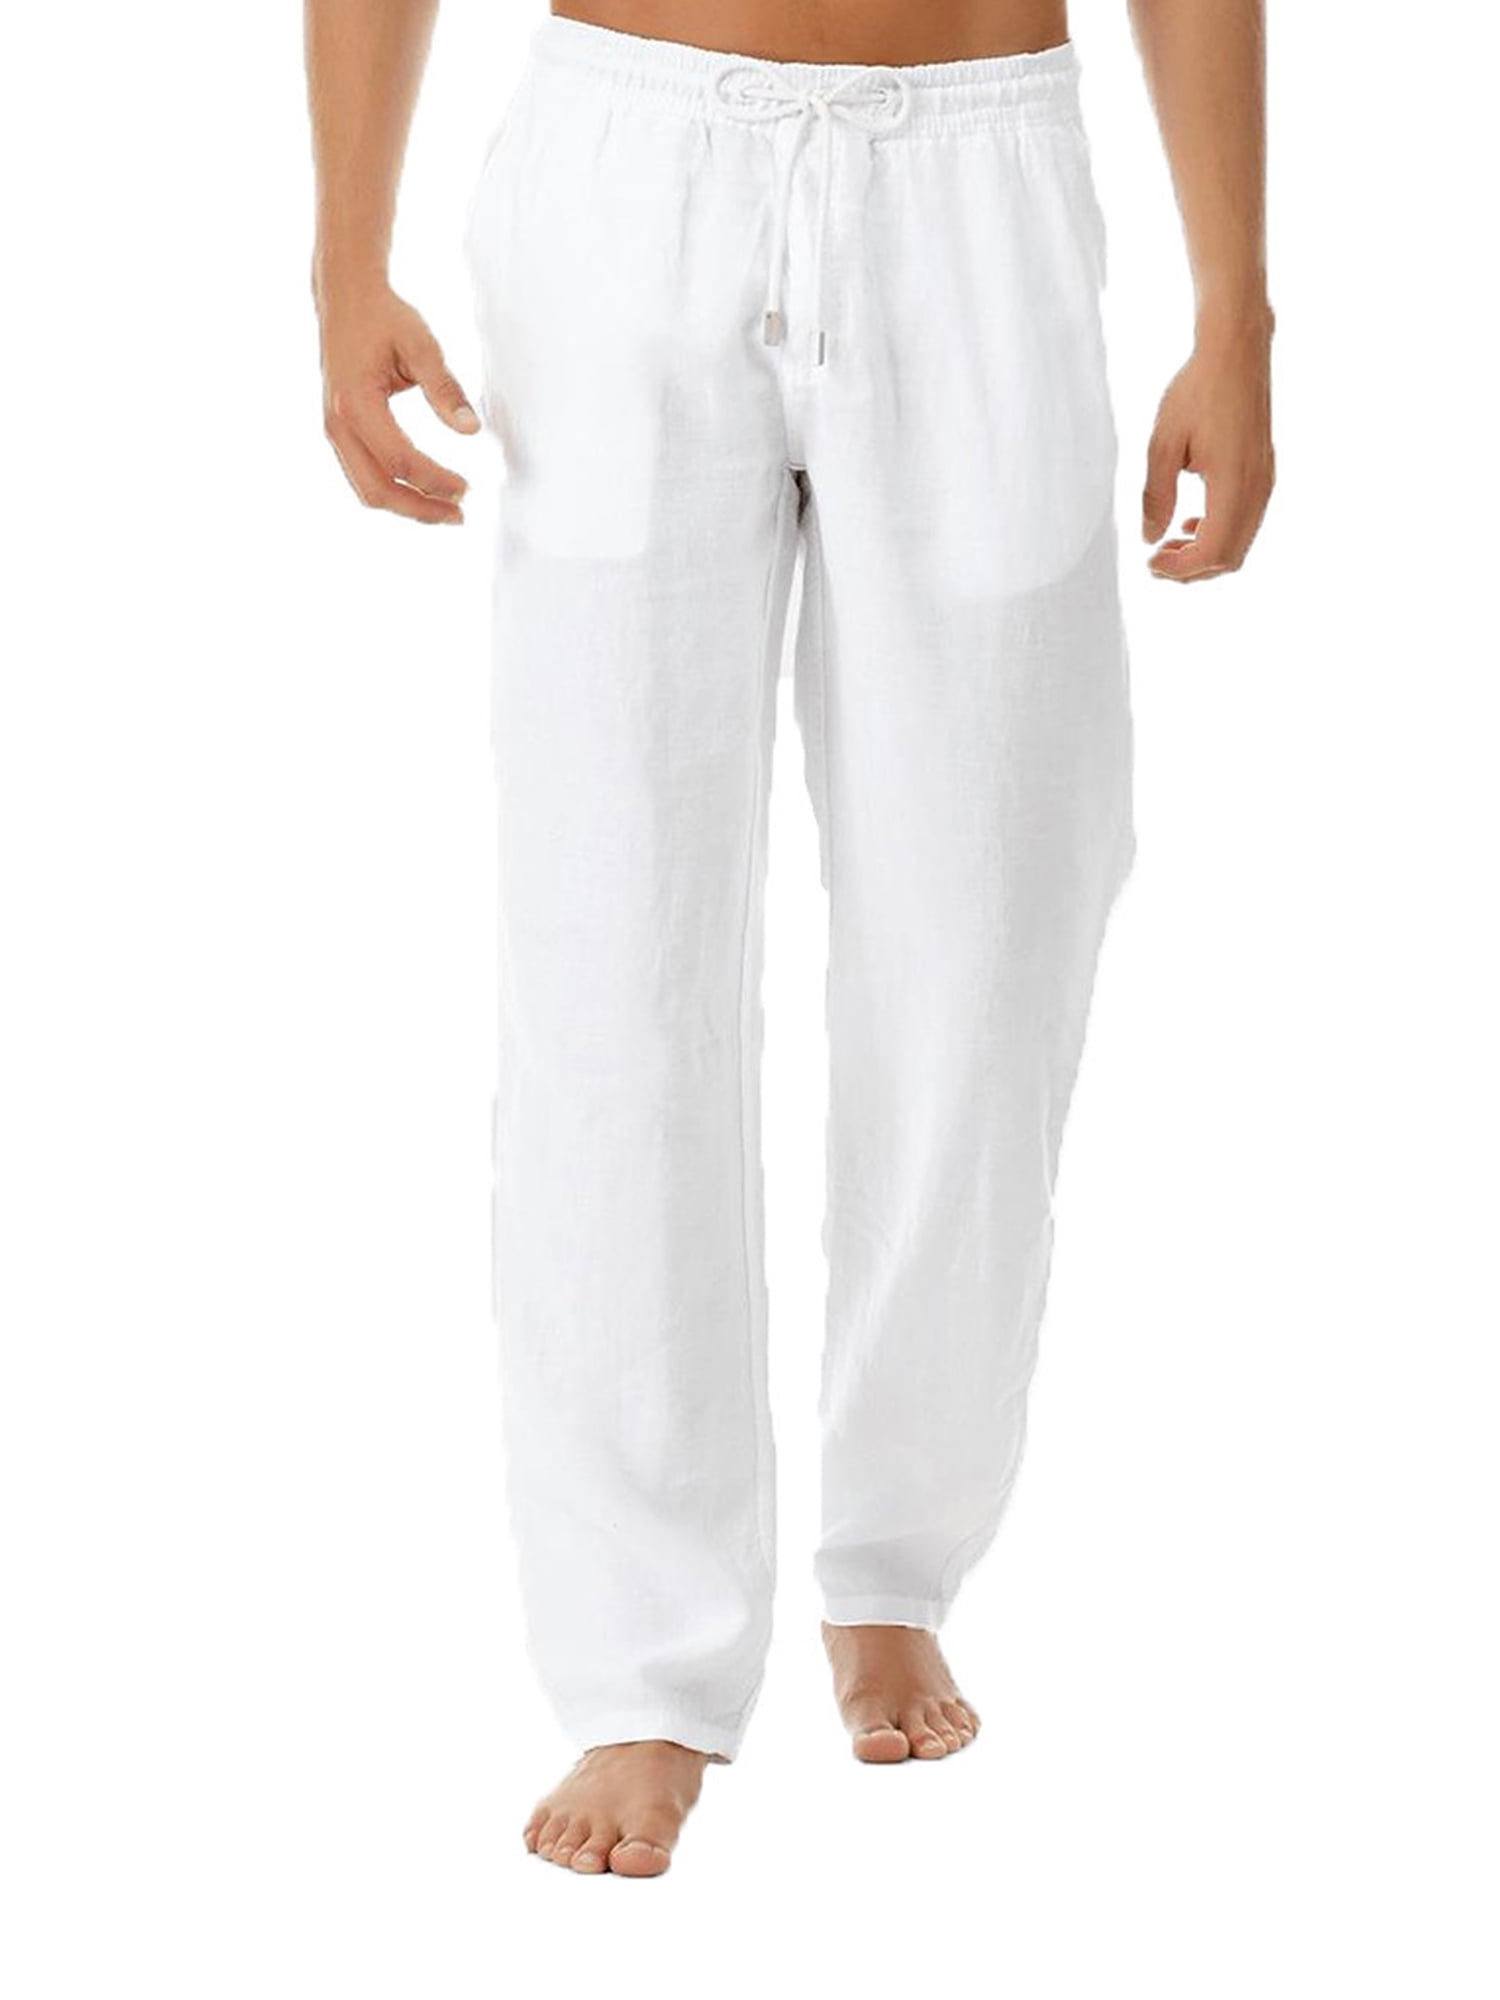 Men's Drawstring Loose Linen Beach Pants Lightweight Elastic Waist Yoga Lounge Cotton Trousers Pajamas 